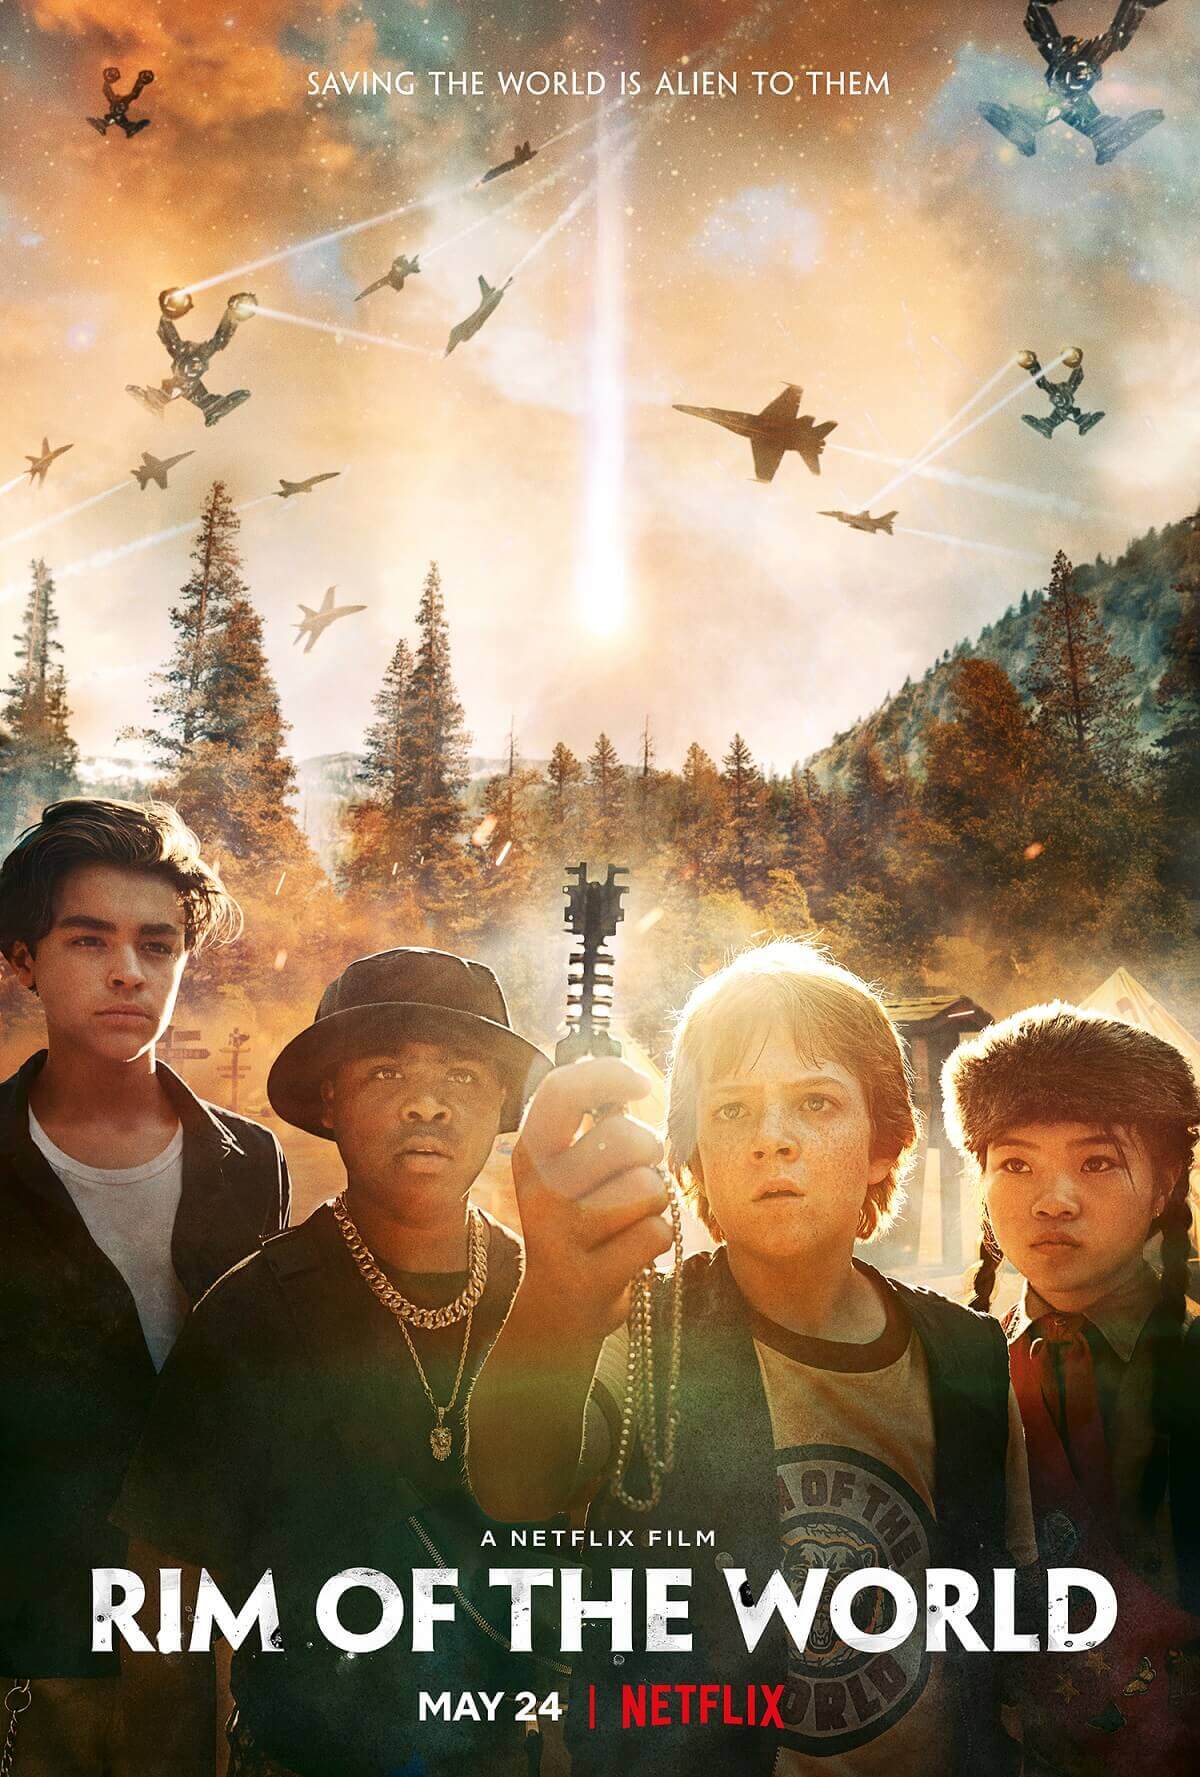 'Rim of the World' Trailer: It's Camp Kids vs. Alien Invaders